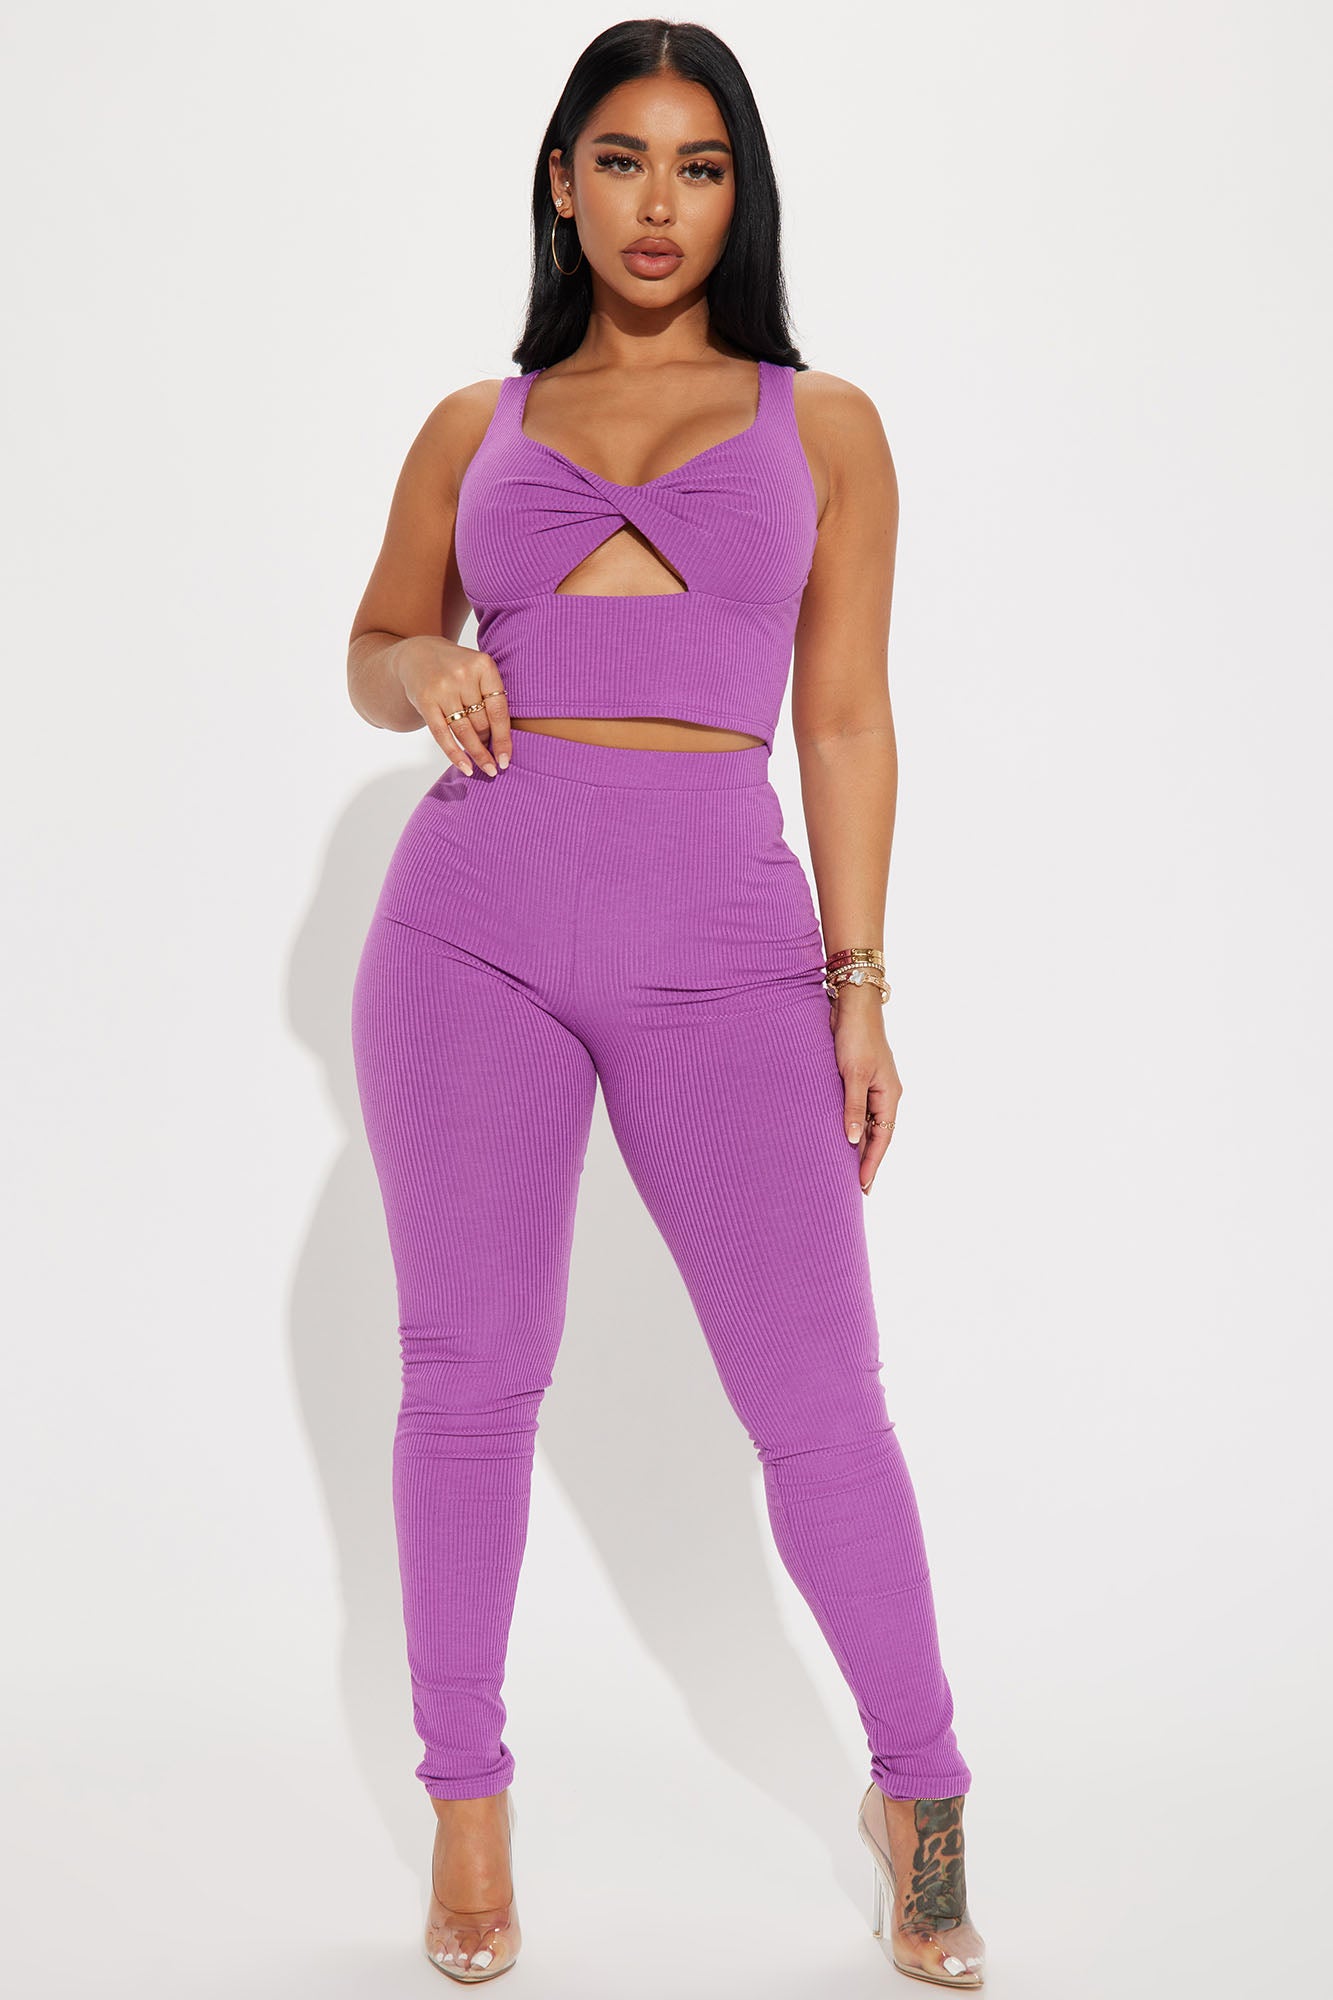 | Nova Fashion Your Legging Fashion Nova, | Matching On Sets Side Purple - Set